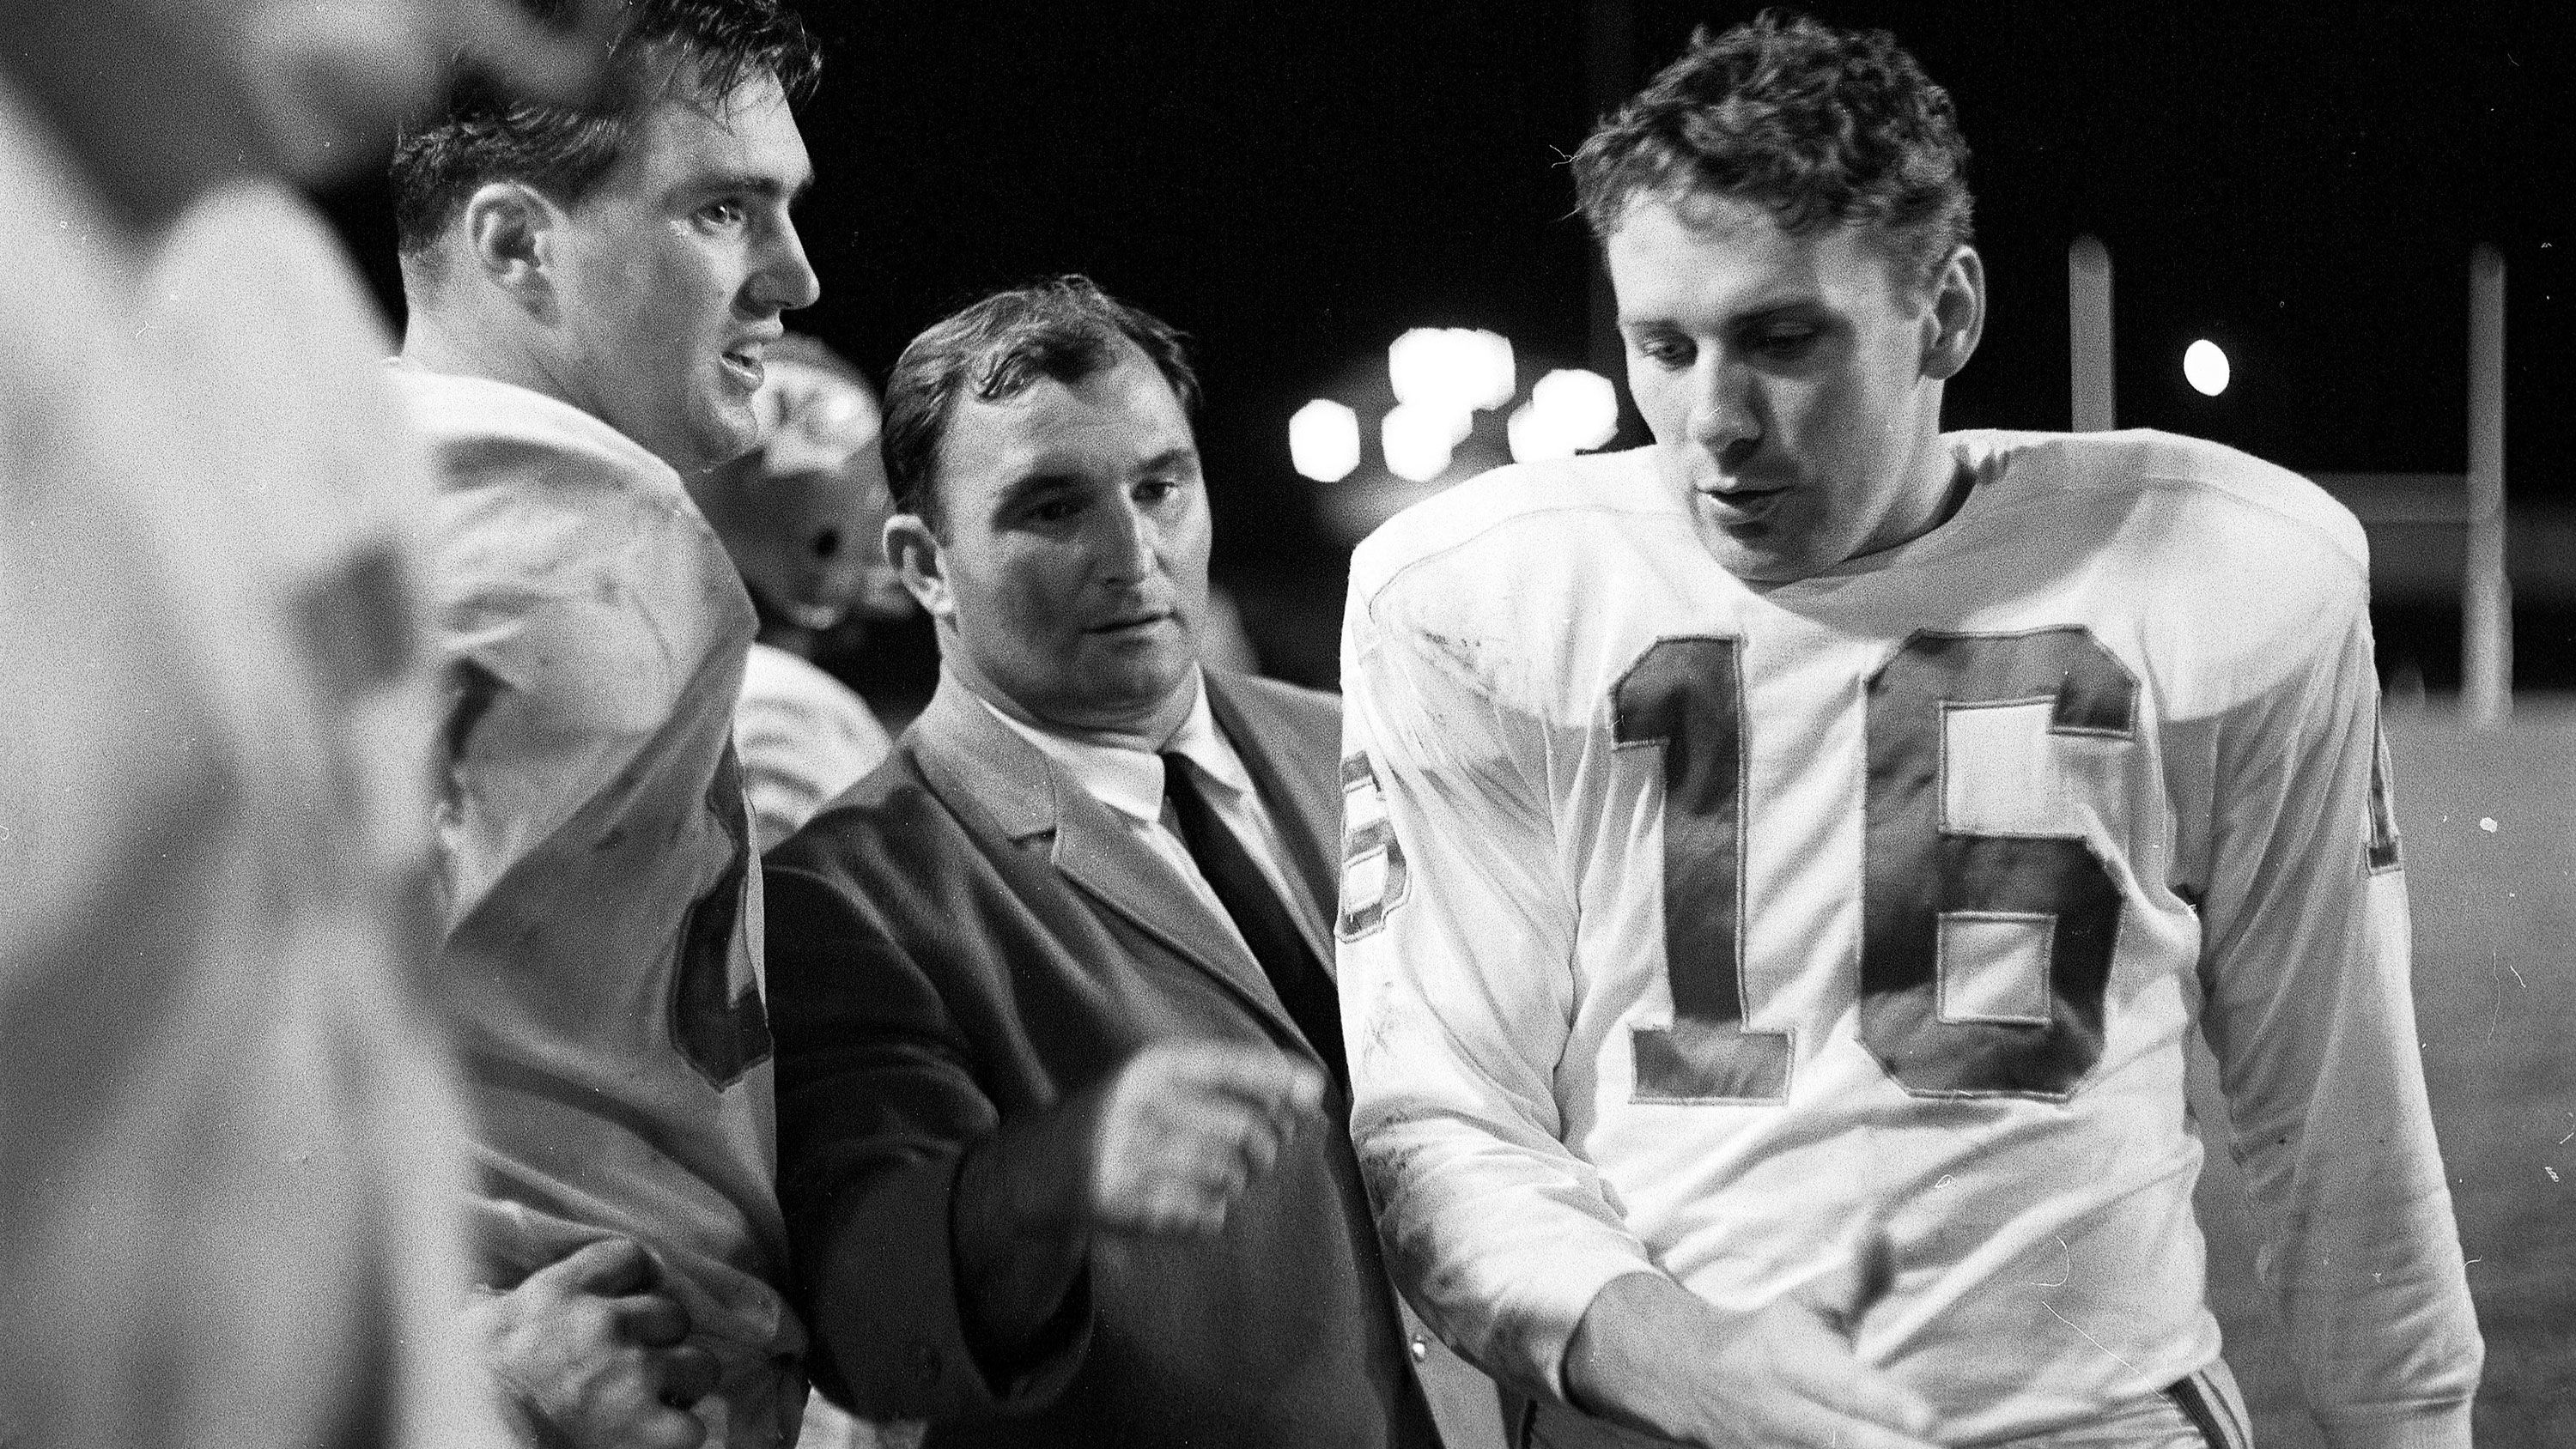 Hall of Fame Kansas City Chiefs quarterback Len Dawson dies at 87